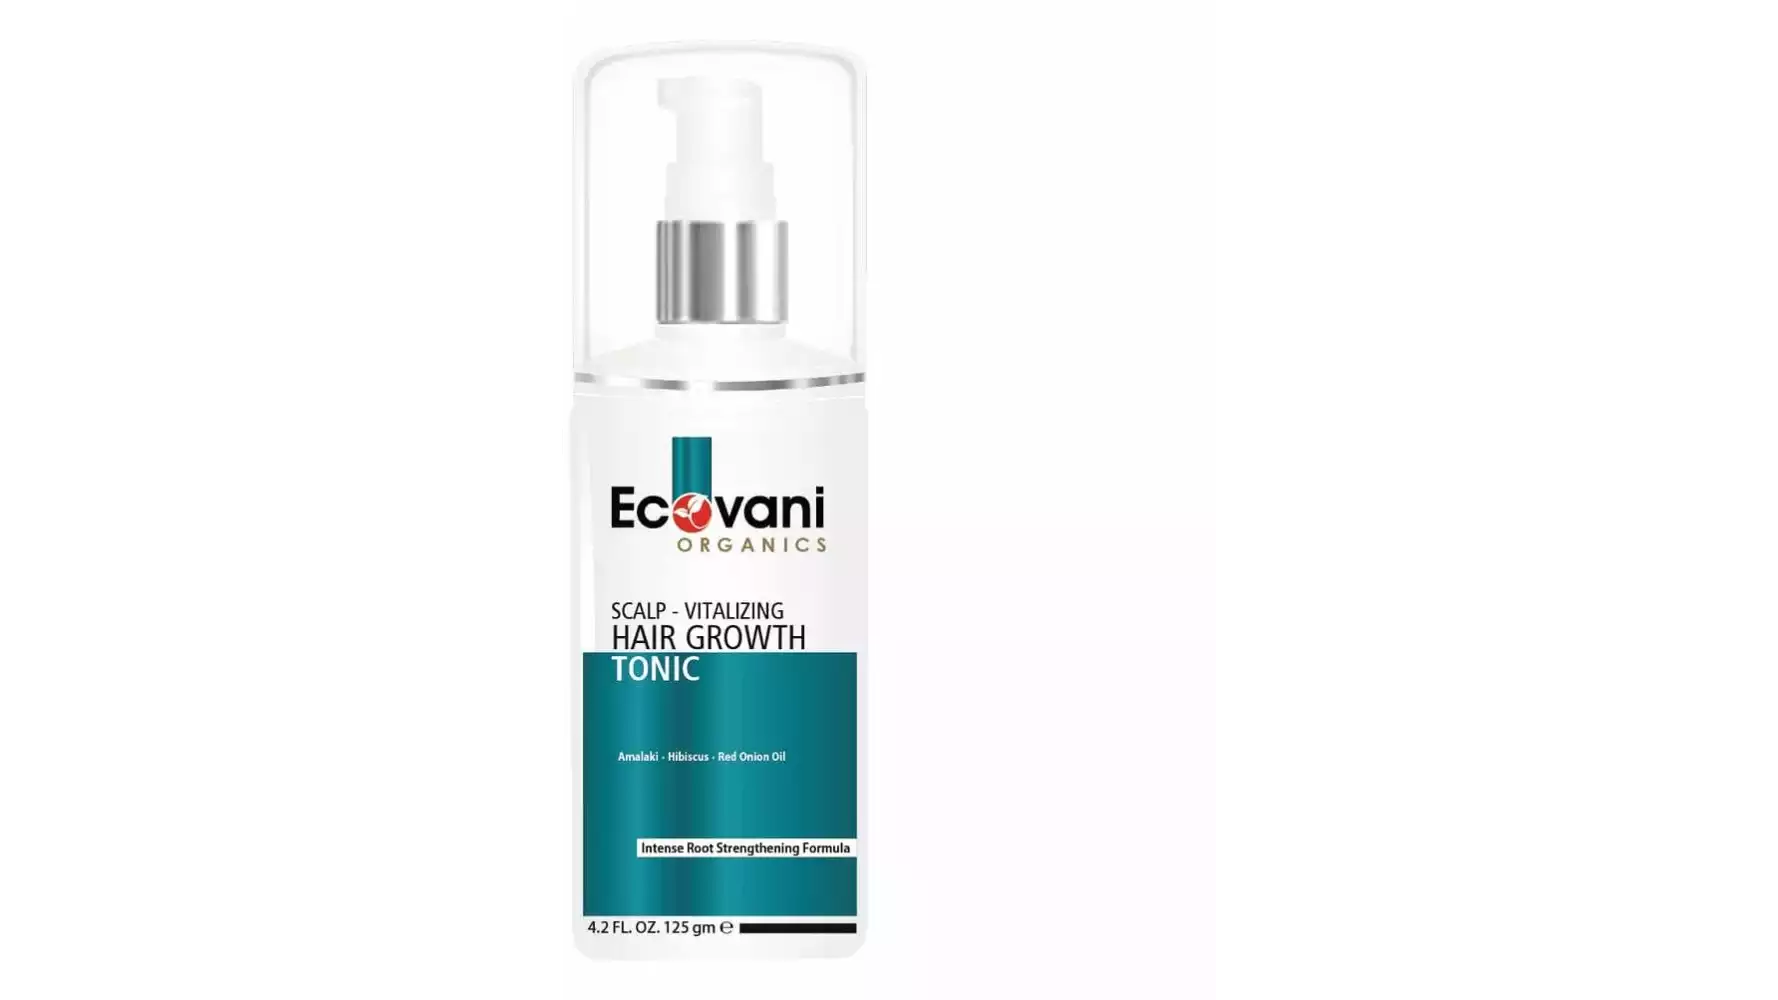 Ecovani Organics Scalp Vitalizing Hair Growth Tonic (125g)